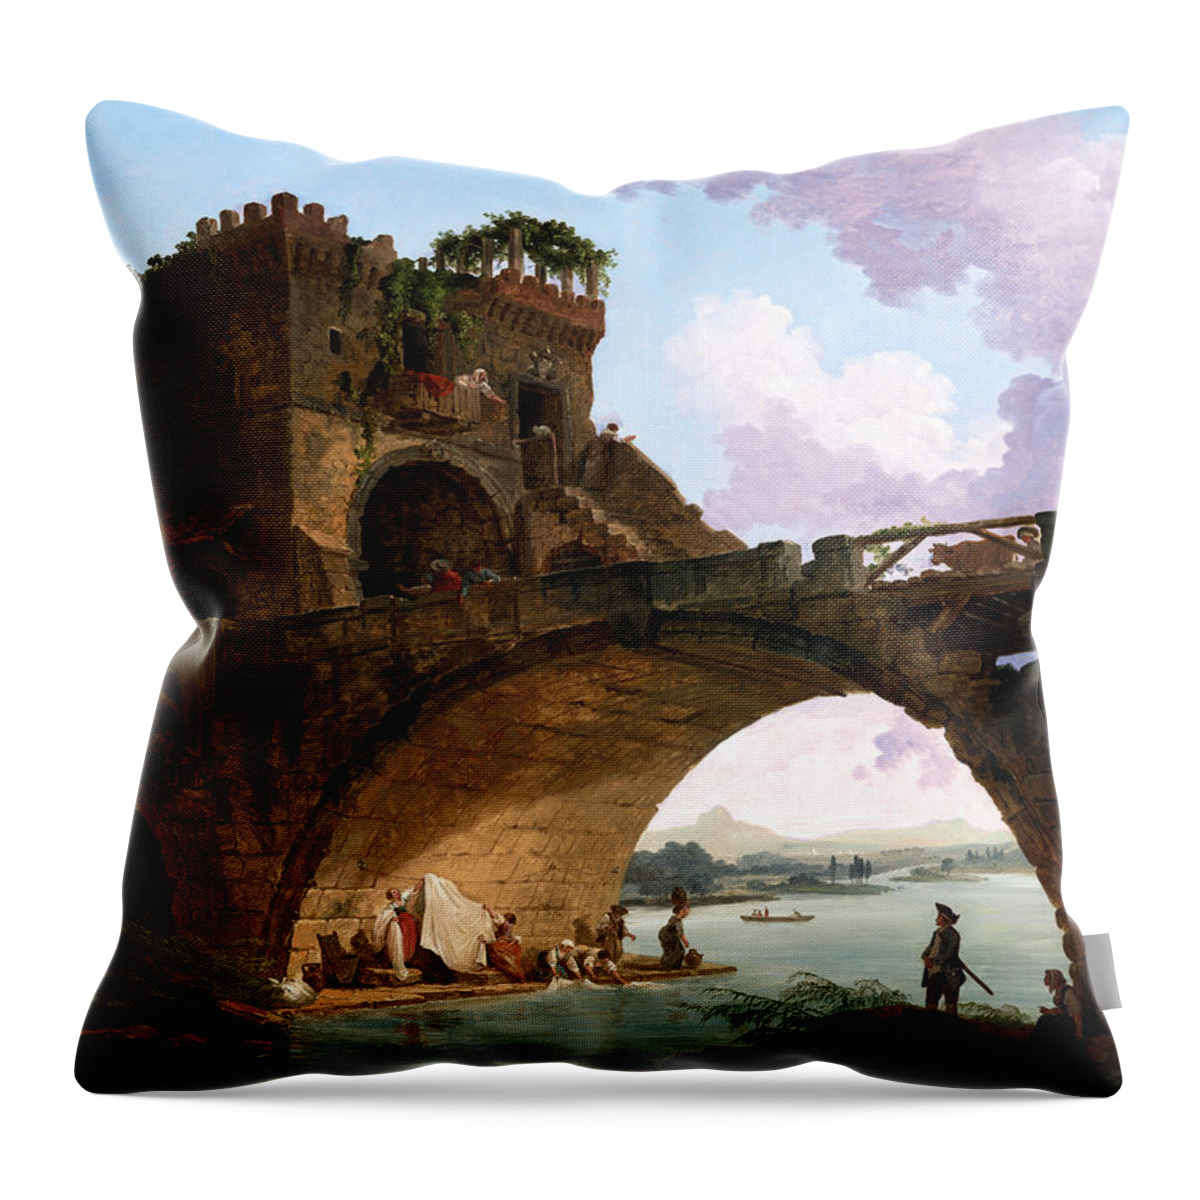 The Ponte Salario Throw Pillow featuring the painting The Ponte Salario by Hubert Robert by Rolando Burbon